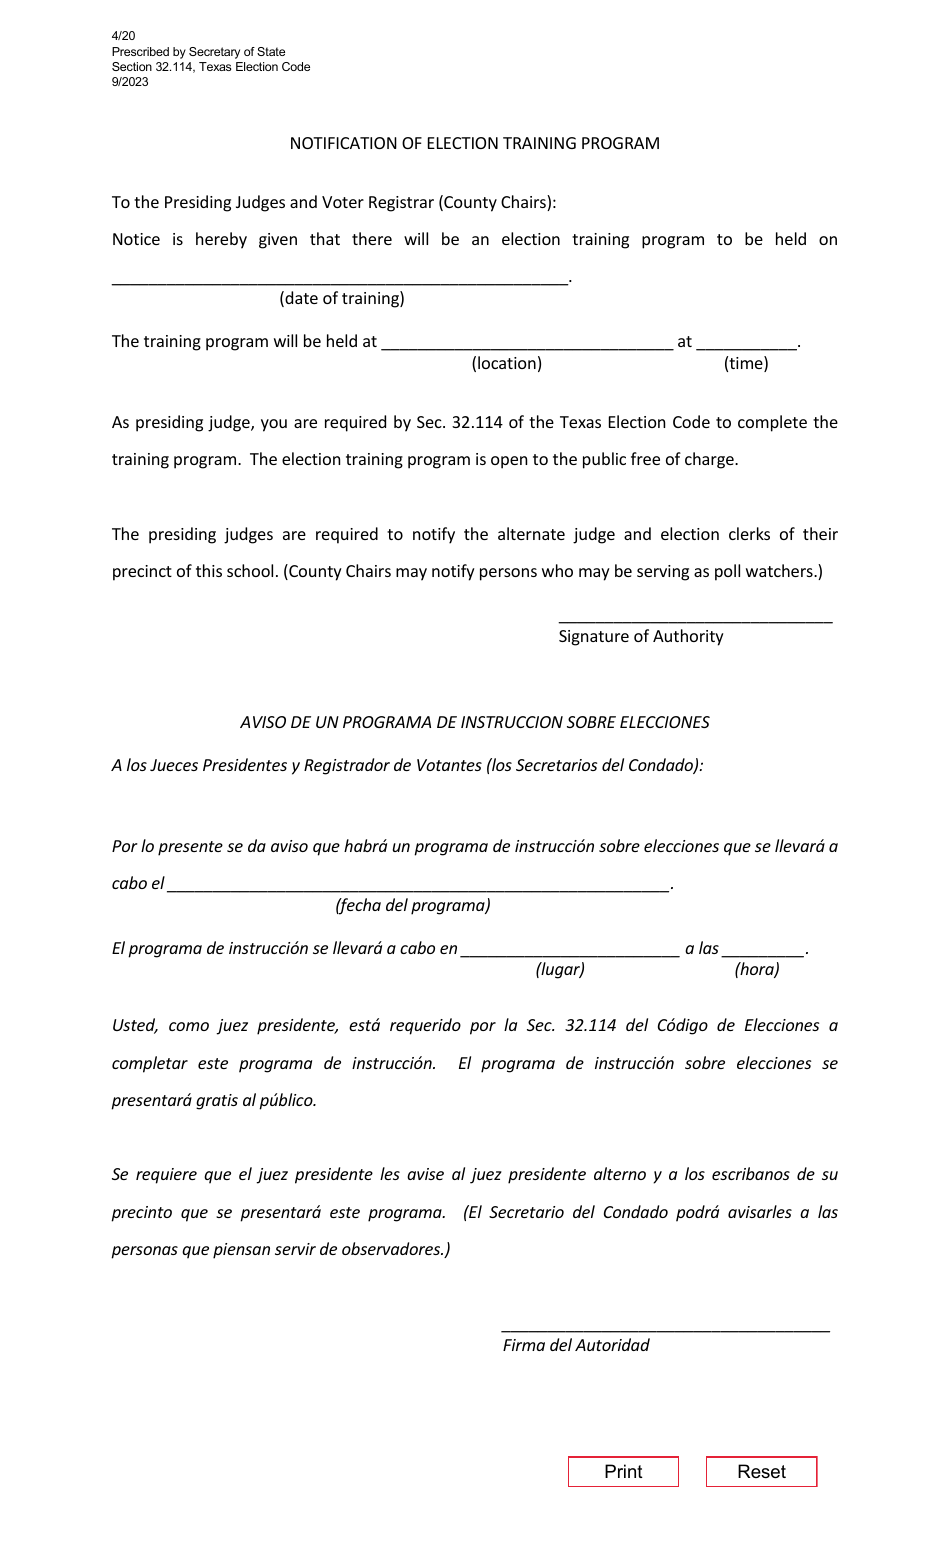 Form 4-20 Notification of Election Training Program - Texas (English / Spanish), Page 1